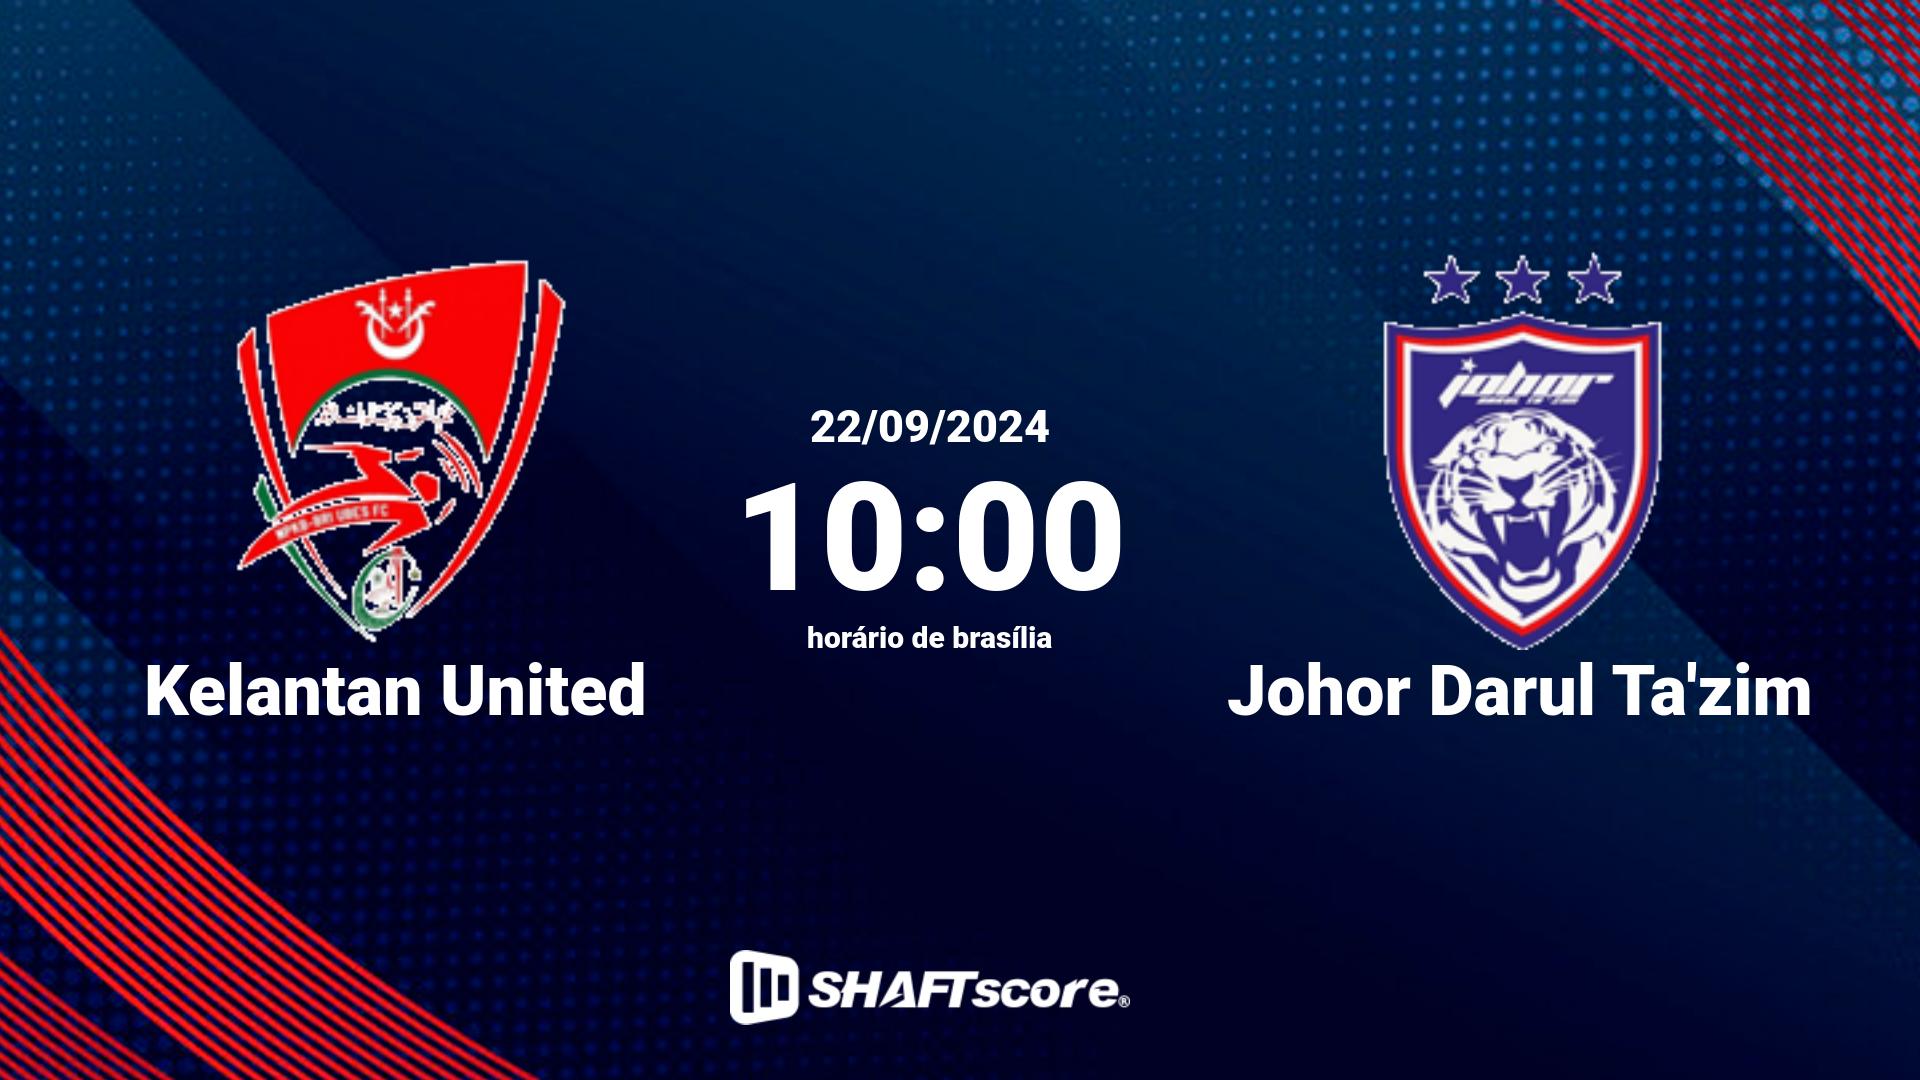 Estatísticas do jogo Kelantan United vs Johor Darul Ta'zim 22.09 10:00